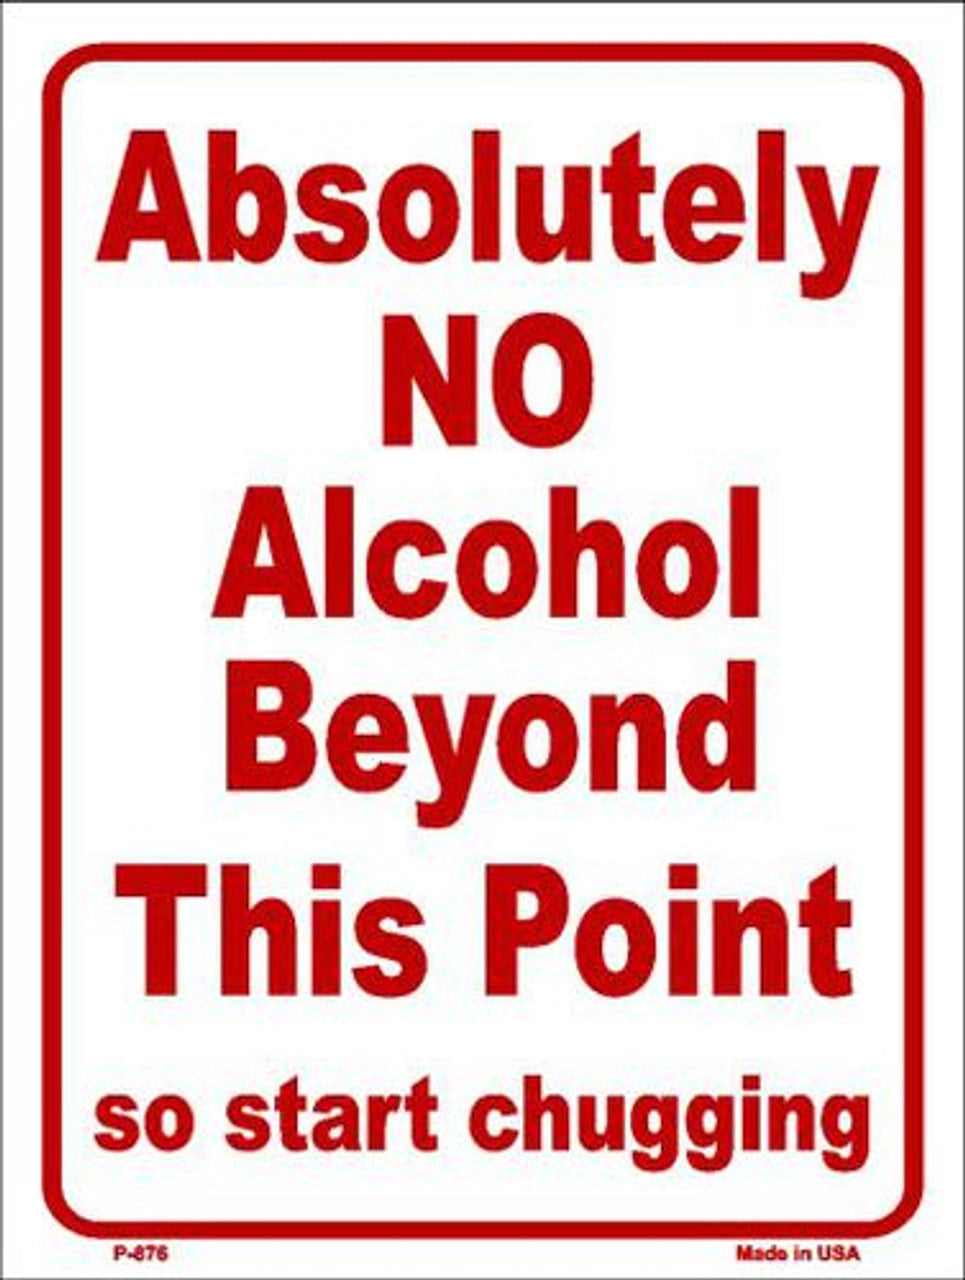 No Alcohol Beyond This Point 9" x 12" Aluminum Metal Parking Sign P-876